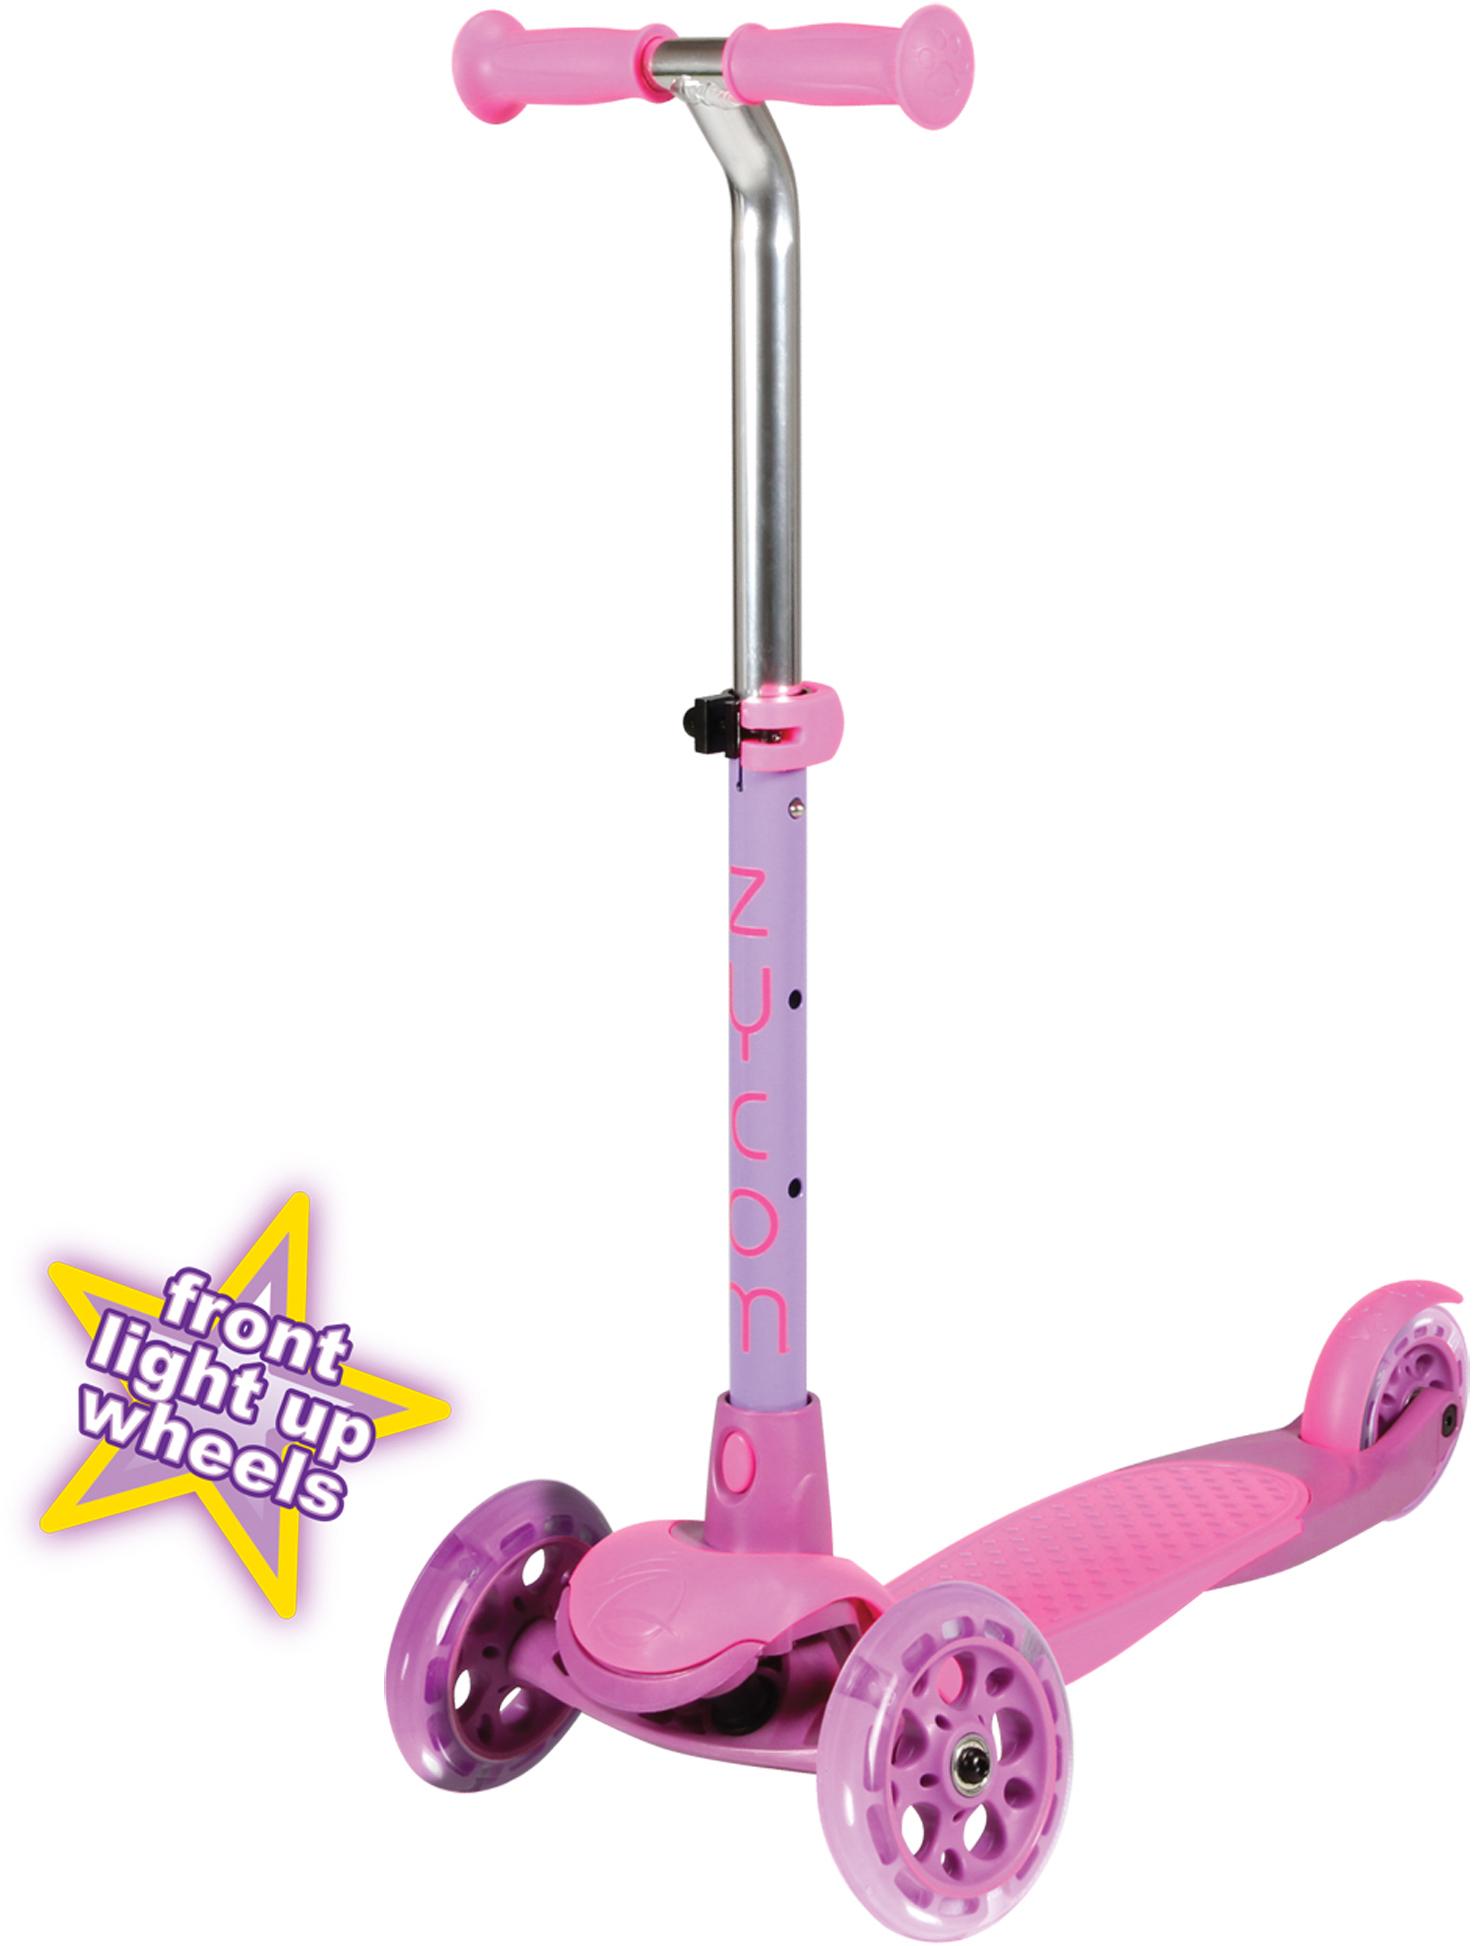 Zycom Zing Light Up Wheels Scooter - Pink/Purple